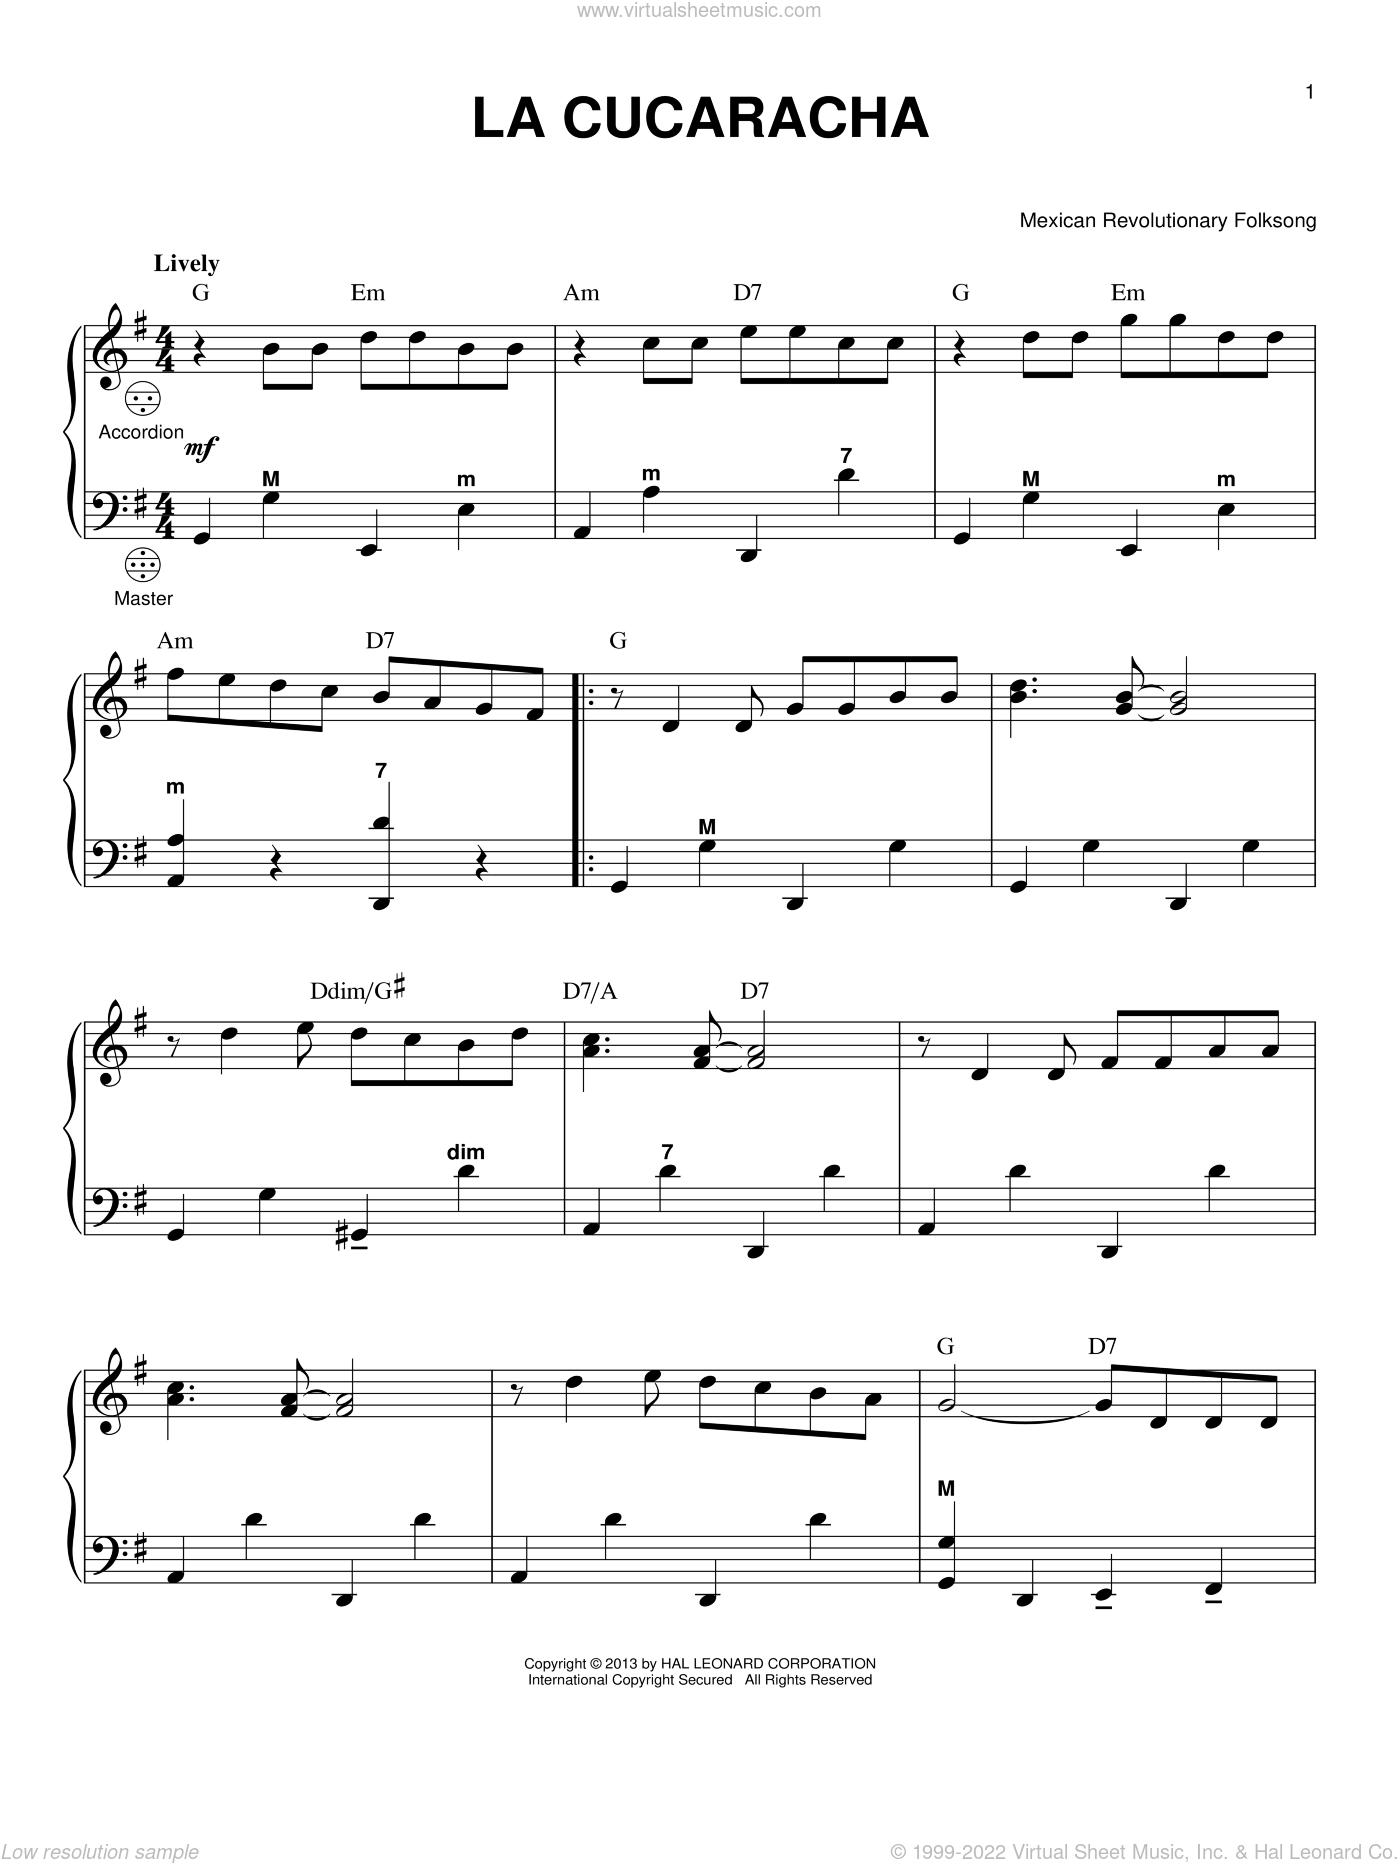 La Cucaracha sheet music for accordion (PDF)